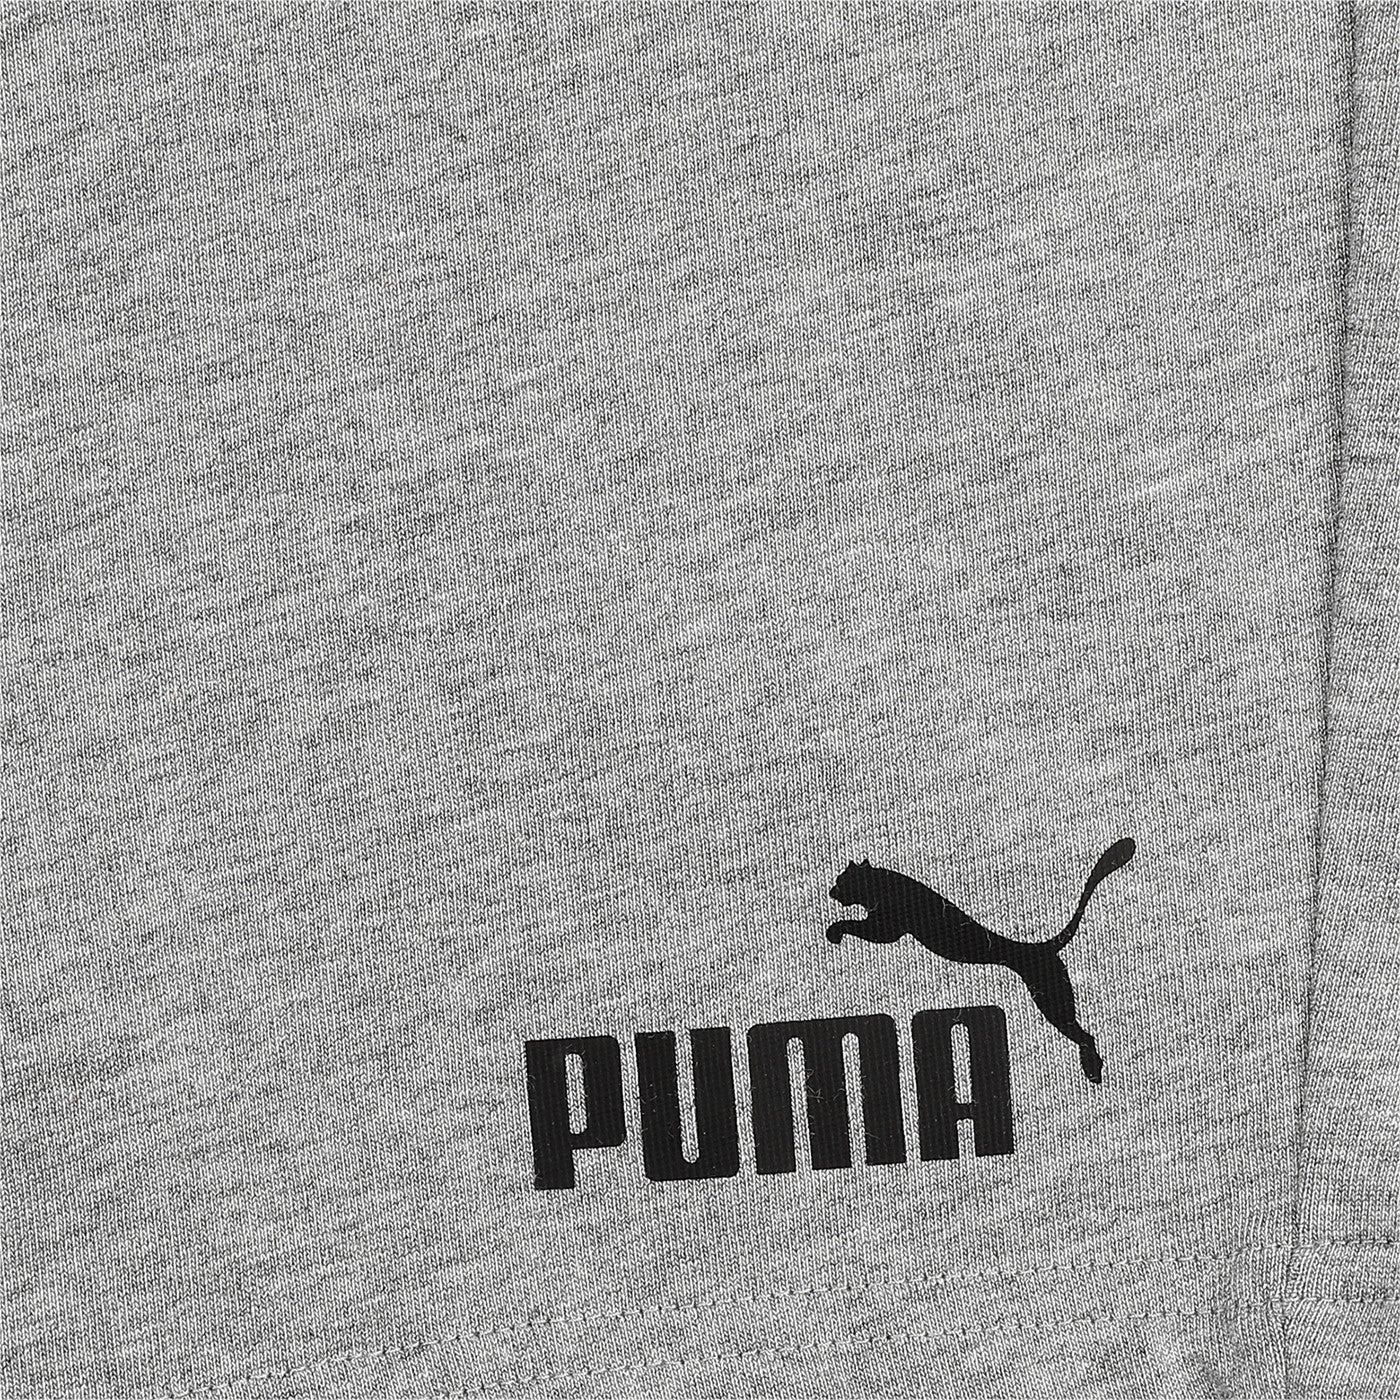 Puma pantaloncino sportivo da ragazzo ESS Jersey Shorts B 586971 03 medium gray heather